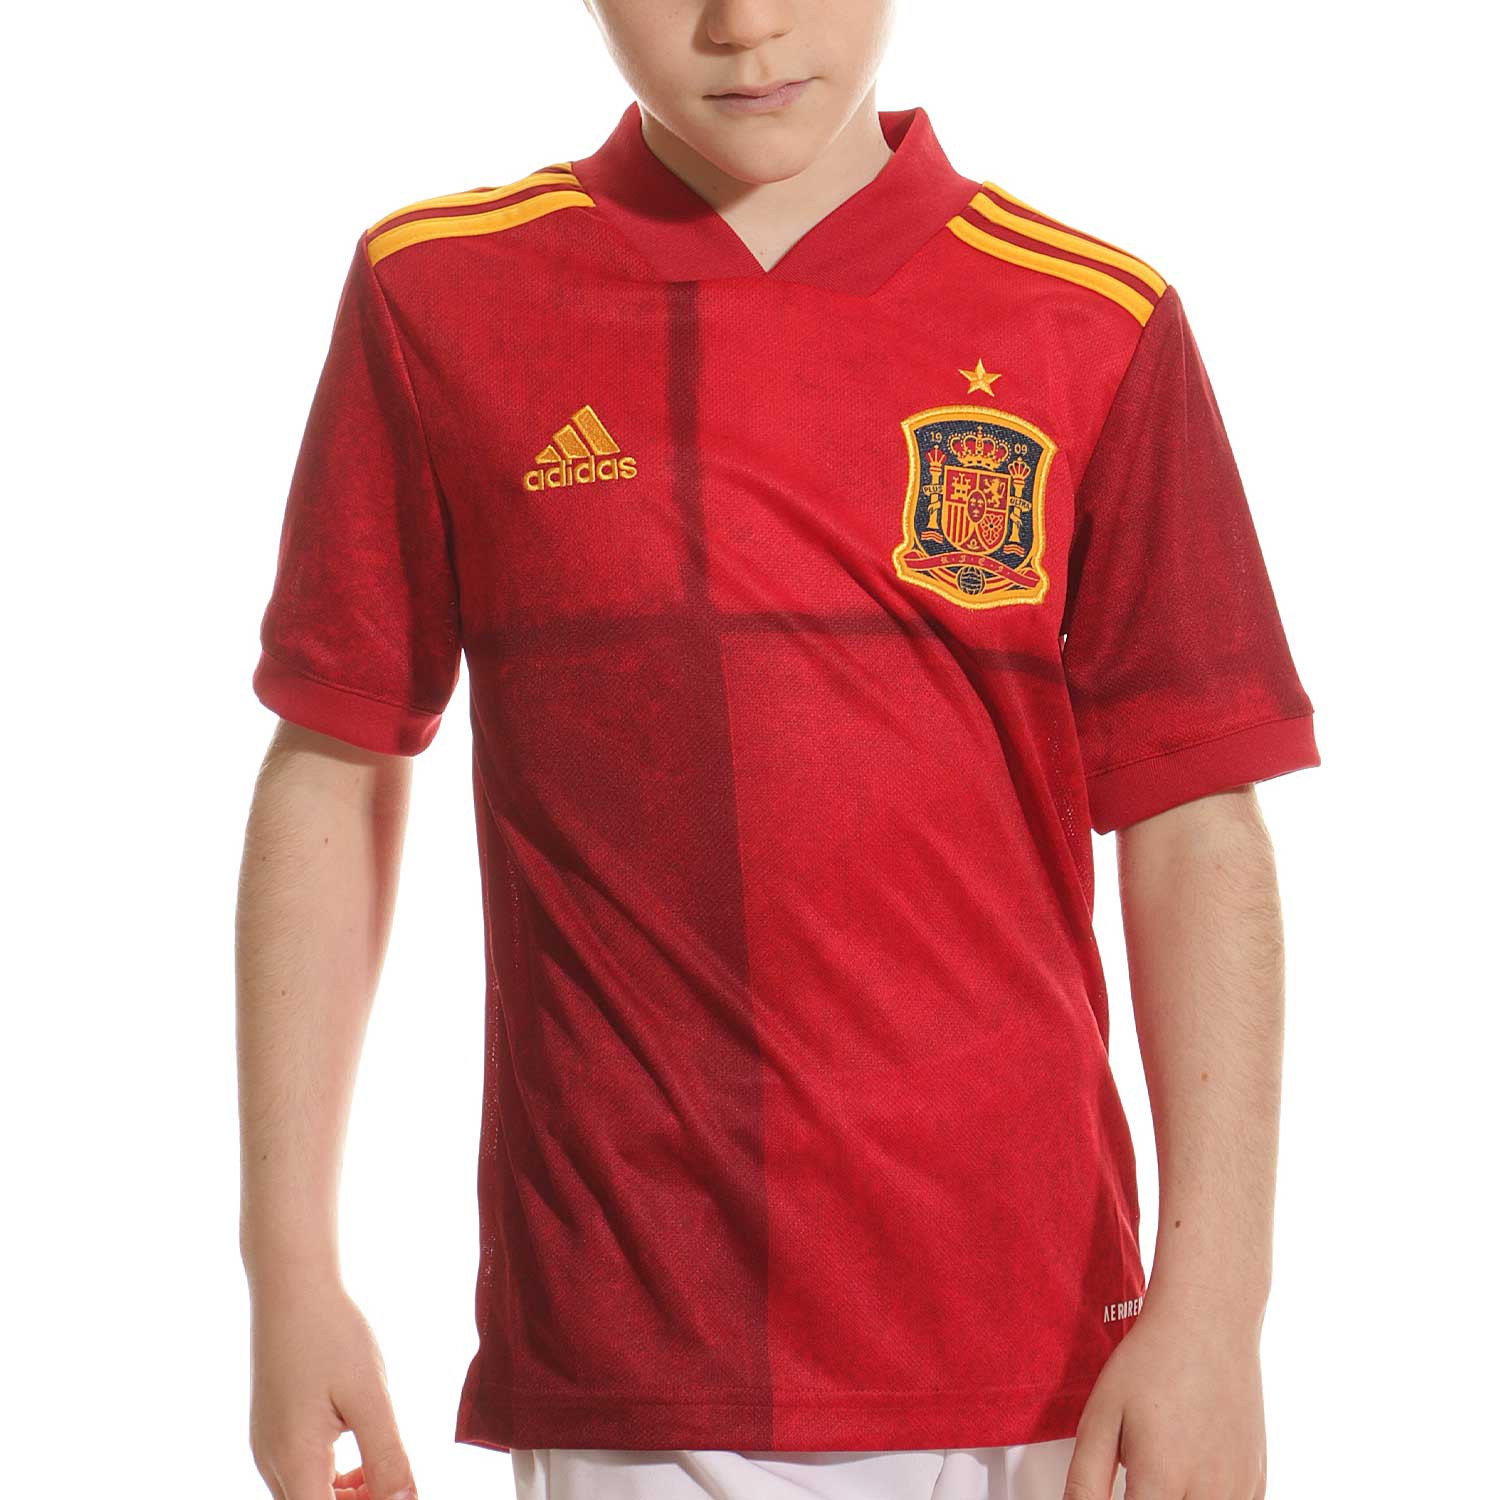 Charlotte Bronte Permanece Dependiente Camiseta niño adidas España 2020 2021 roja | futbolmaniaKids